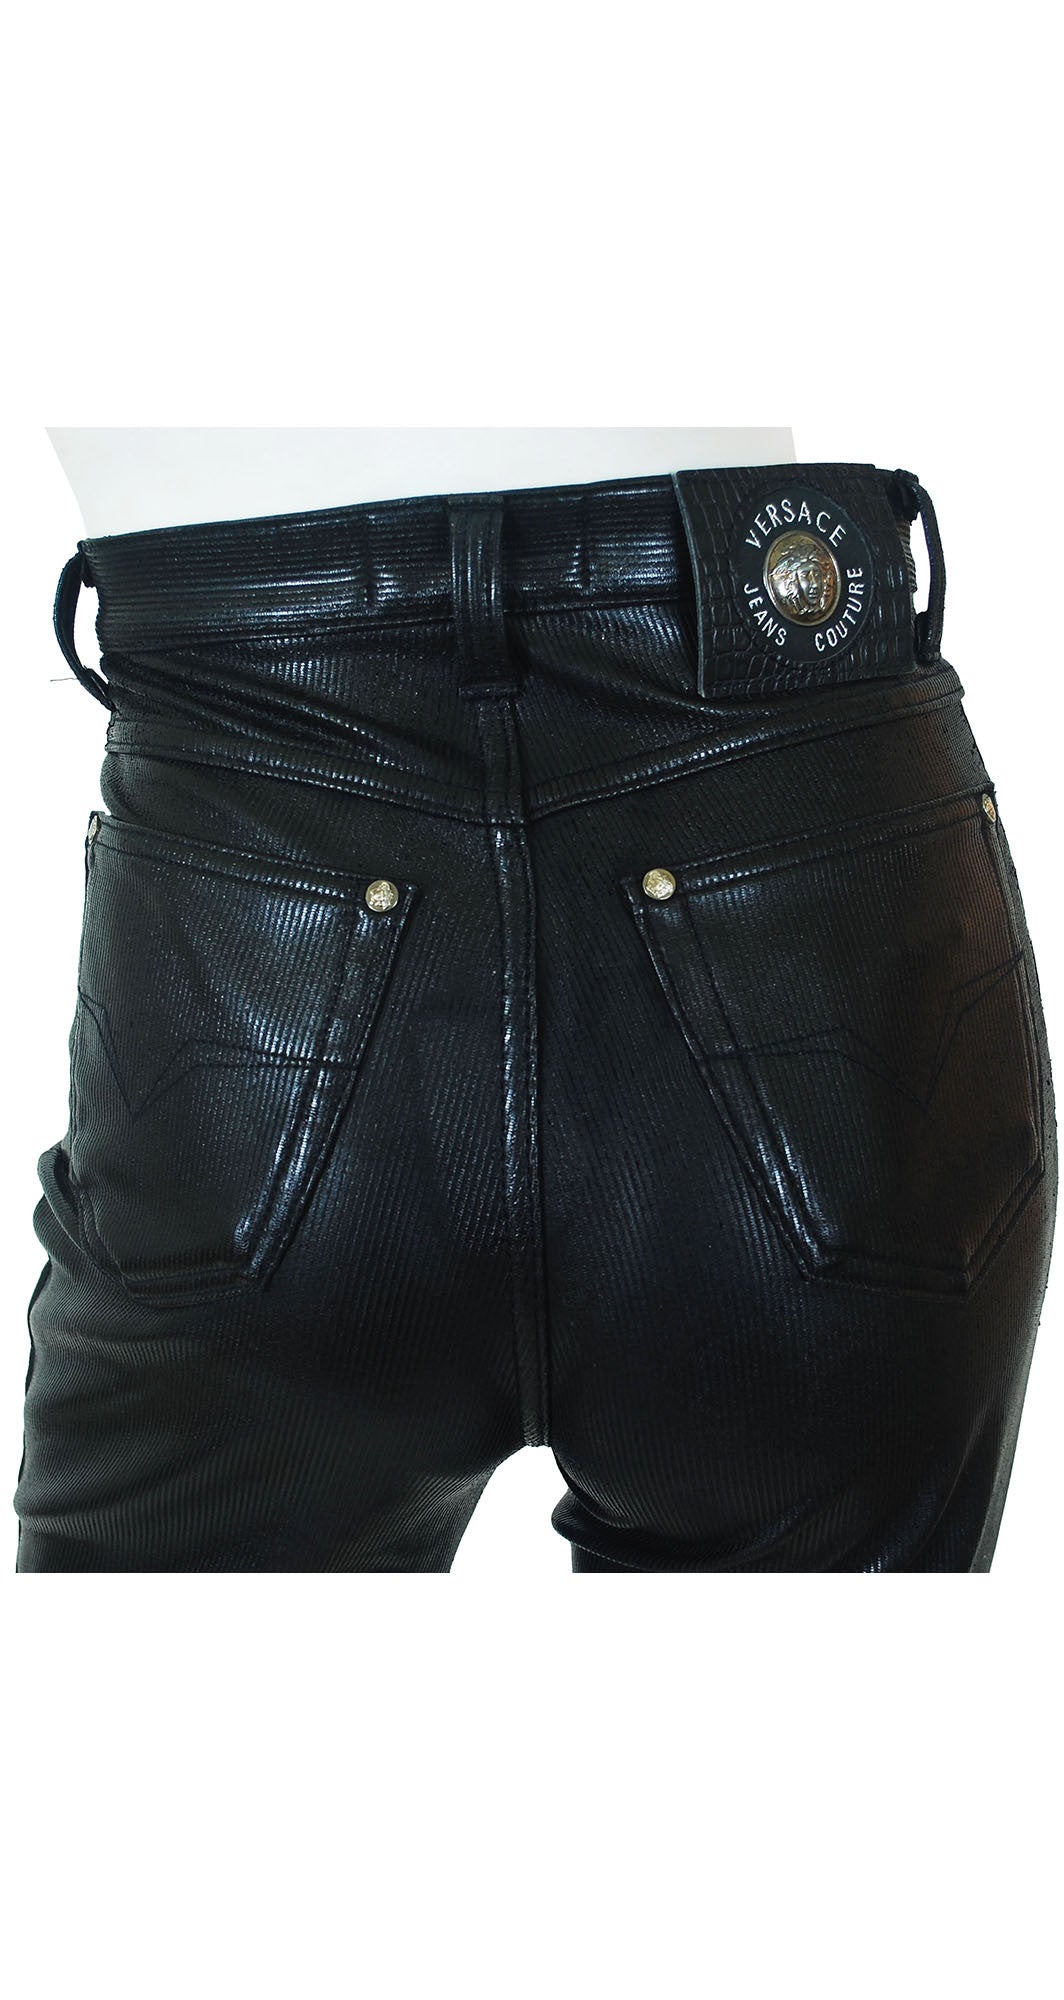 Jeans Couture Black Shiny Disco Pants